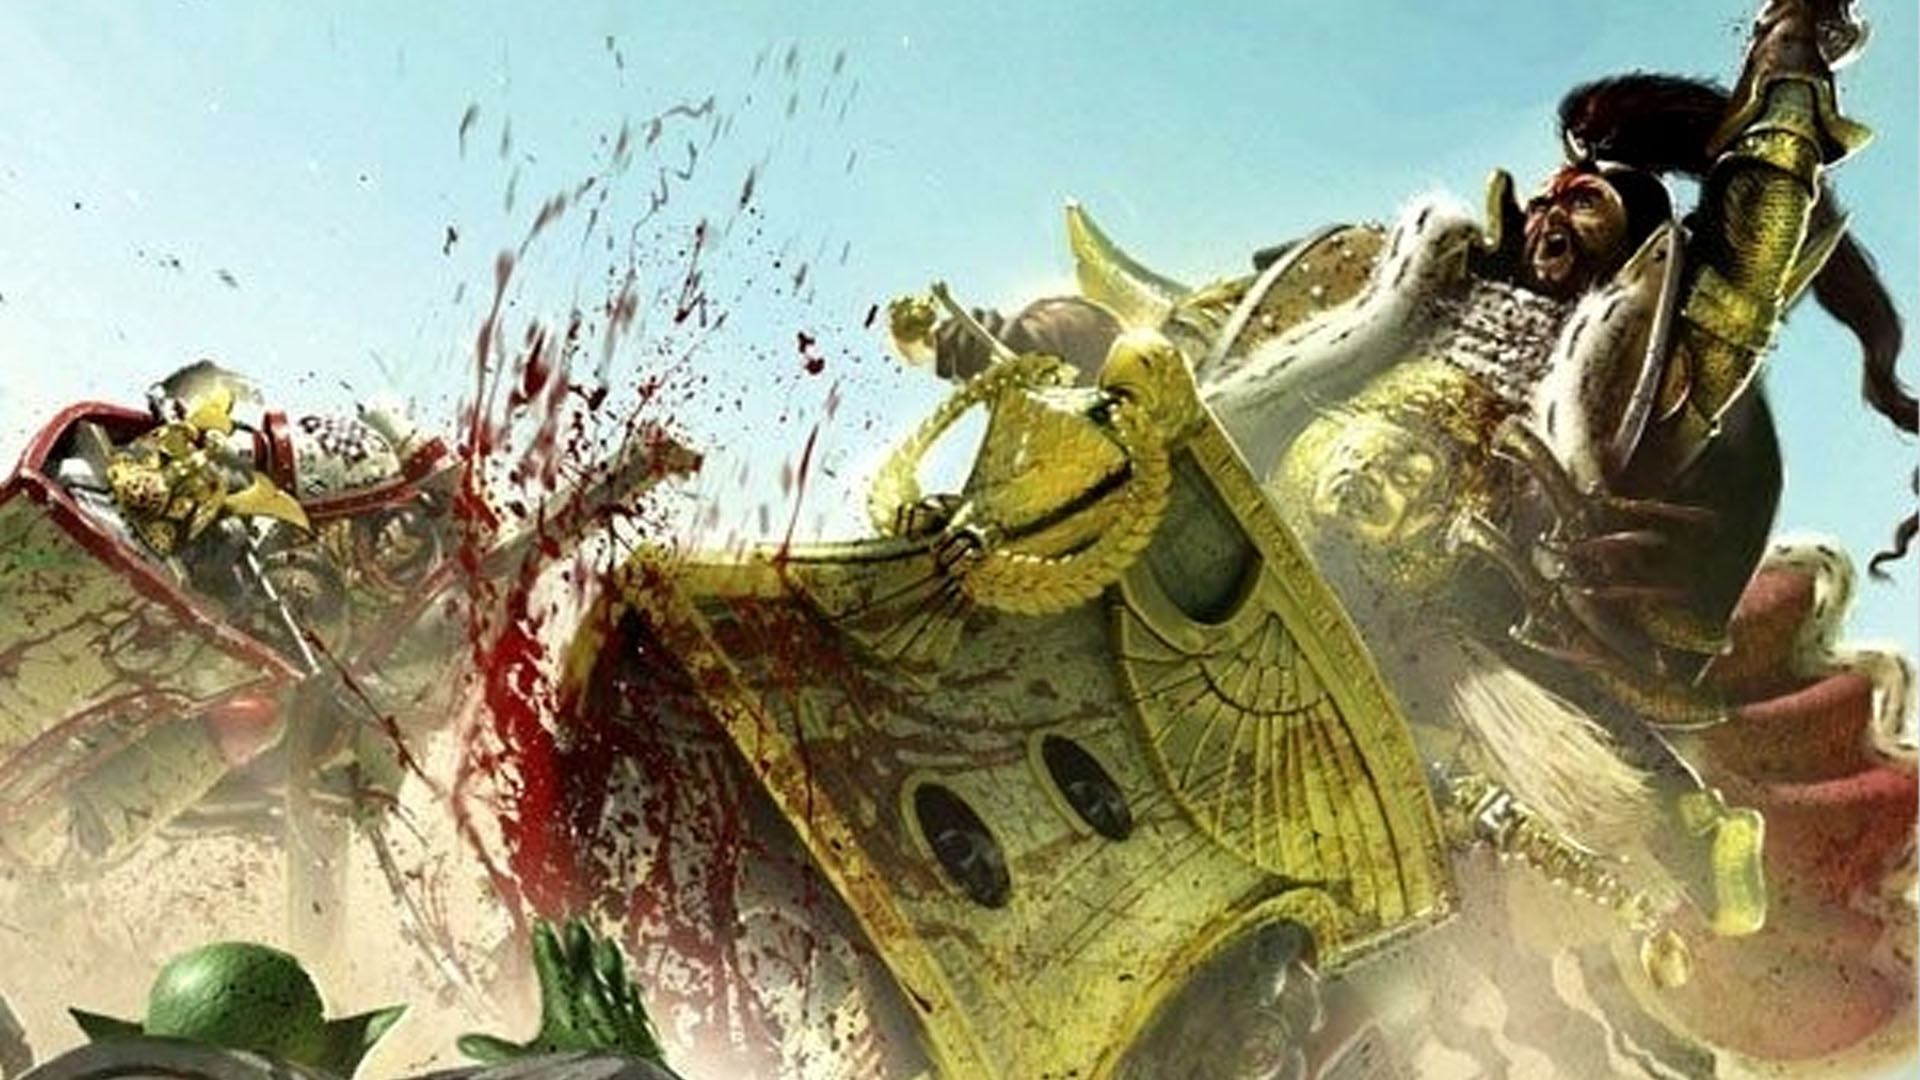 Warhammer 40k Jaghatai Khan guide - Warhammer Community image showing Jaghatai Khan in the cover art of Brotherhood of the Storm